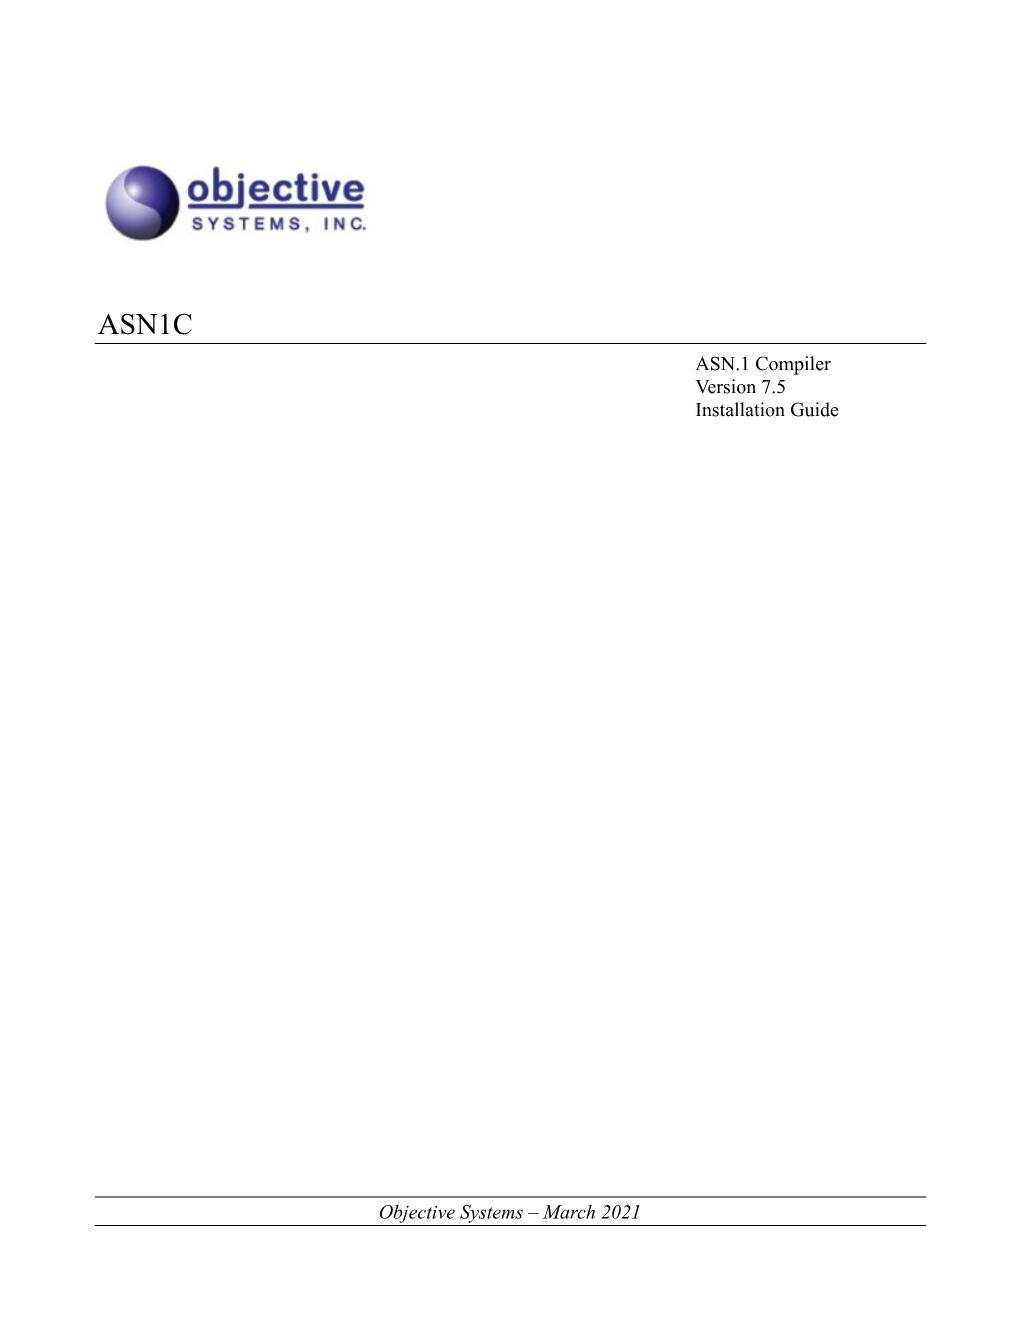 ASN1C Installation Guide